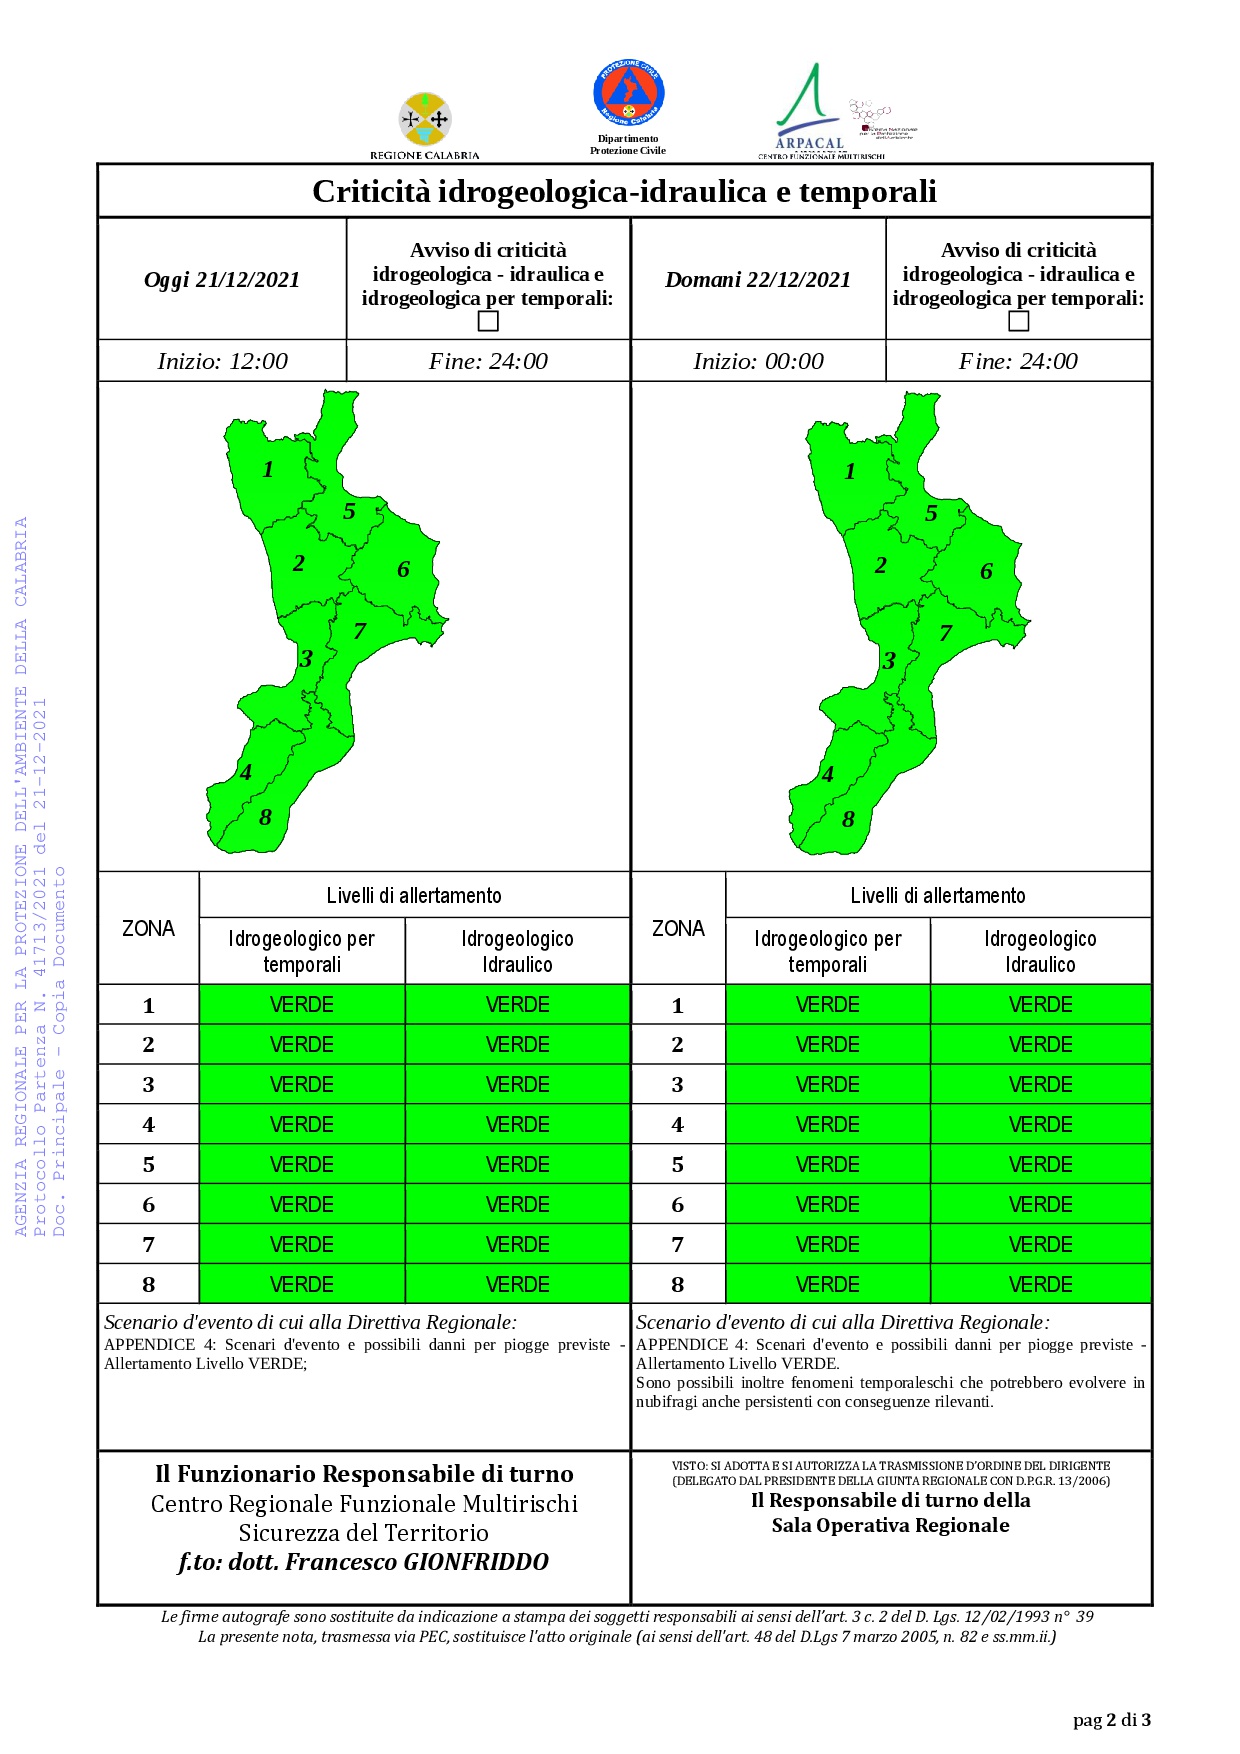 Criticità idrogeologica-idraulica e temporali in Calabria 21-12-2021